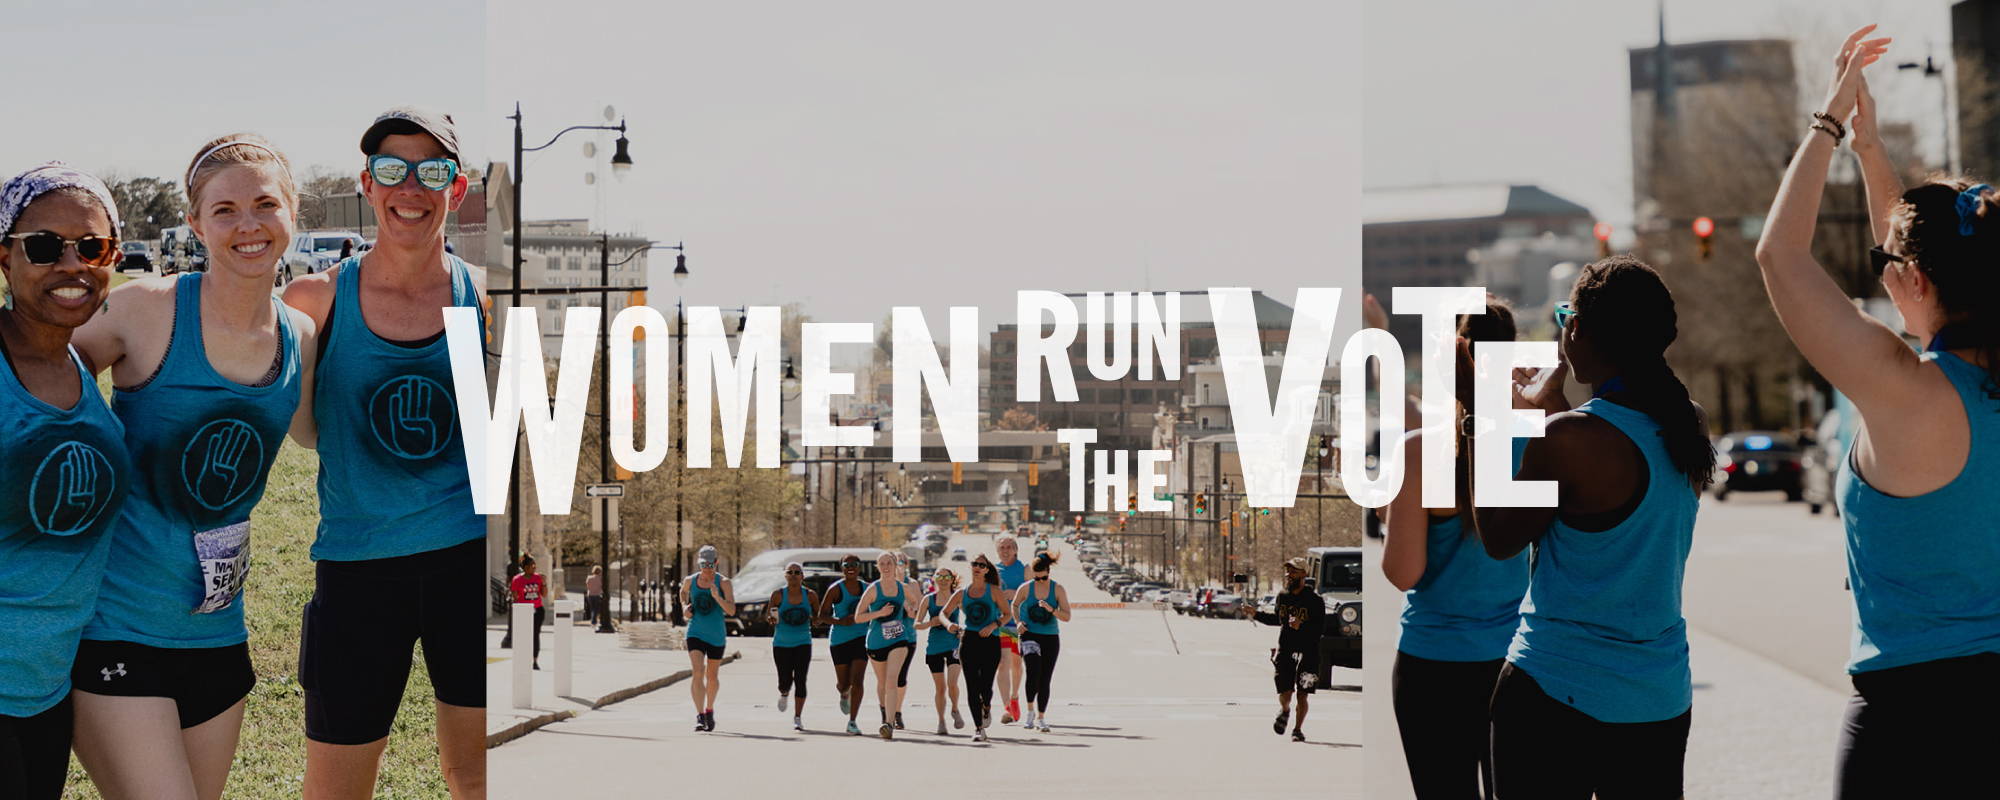 WOMEN RUN THE VOTE RELAY 2022 – OISELLE